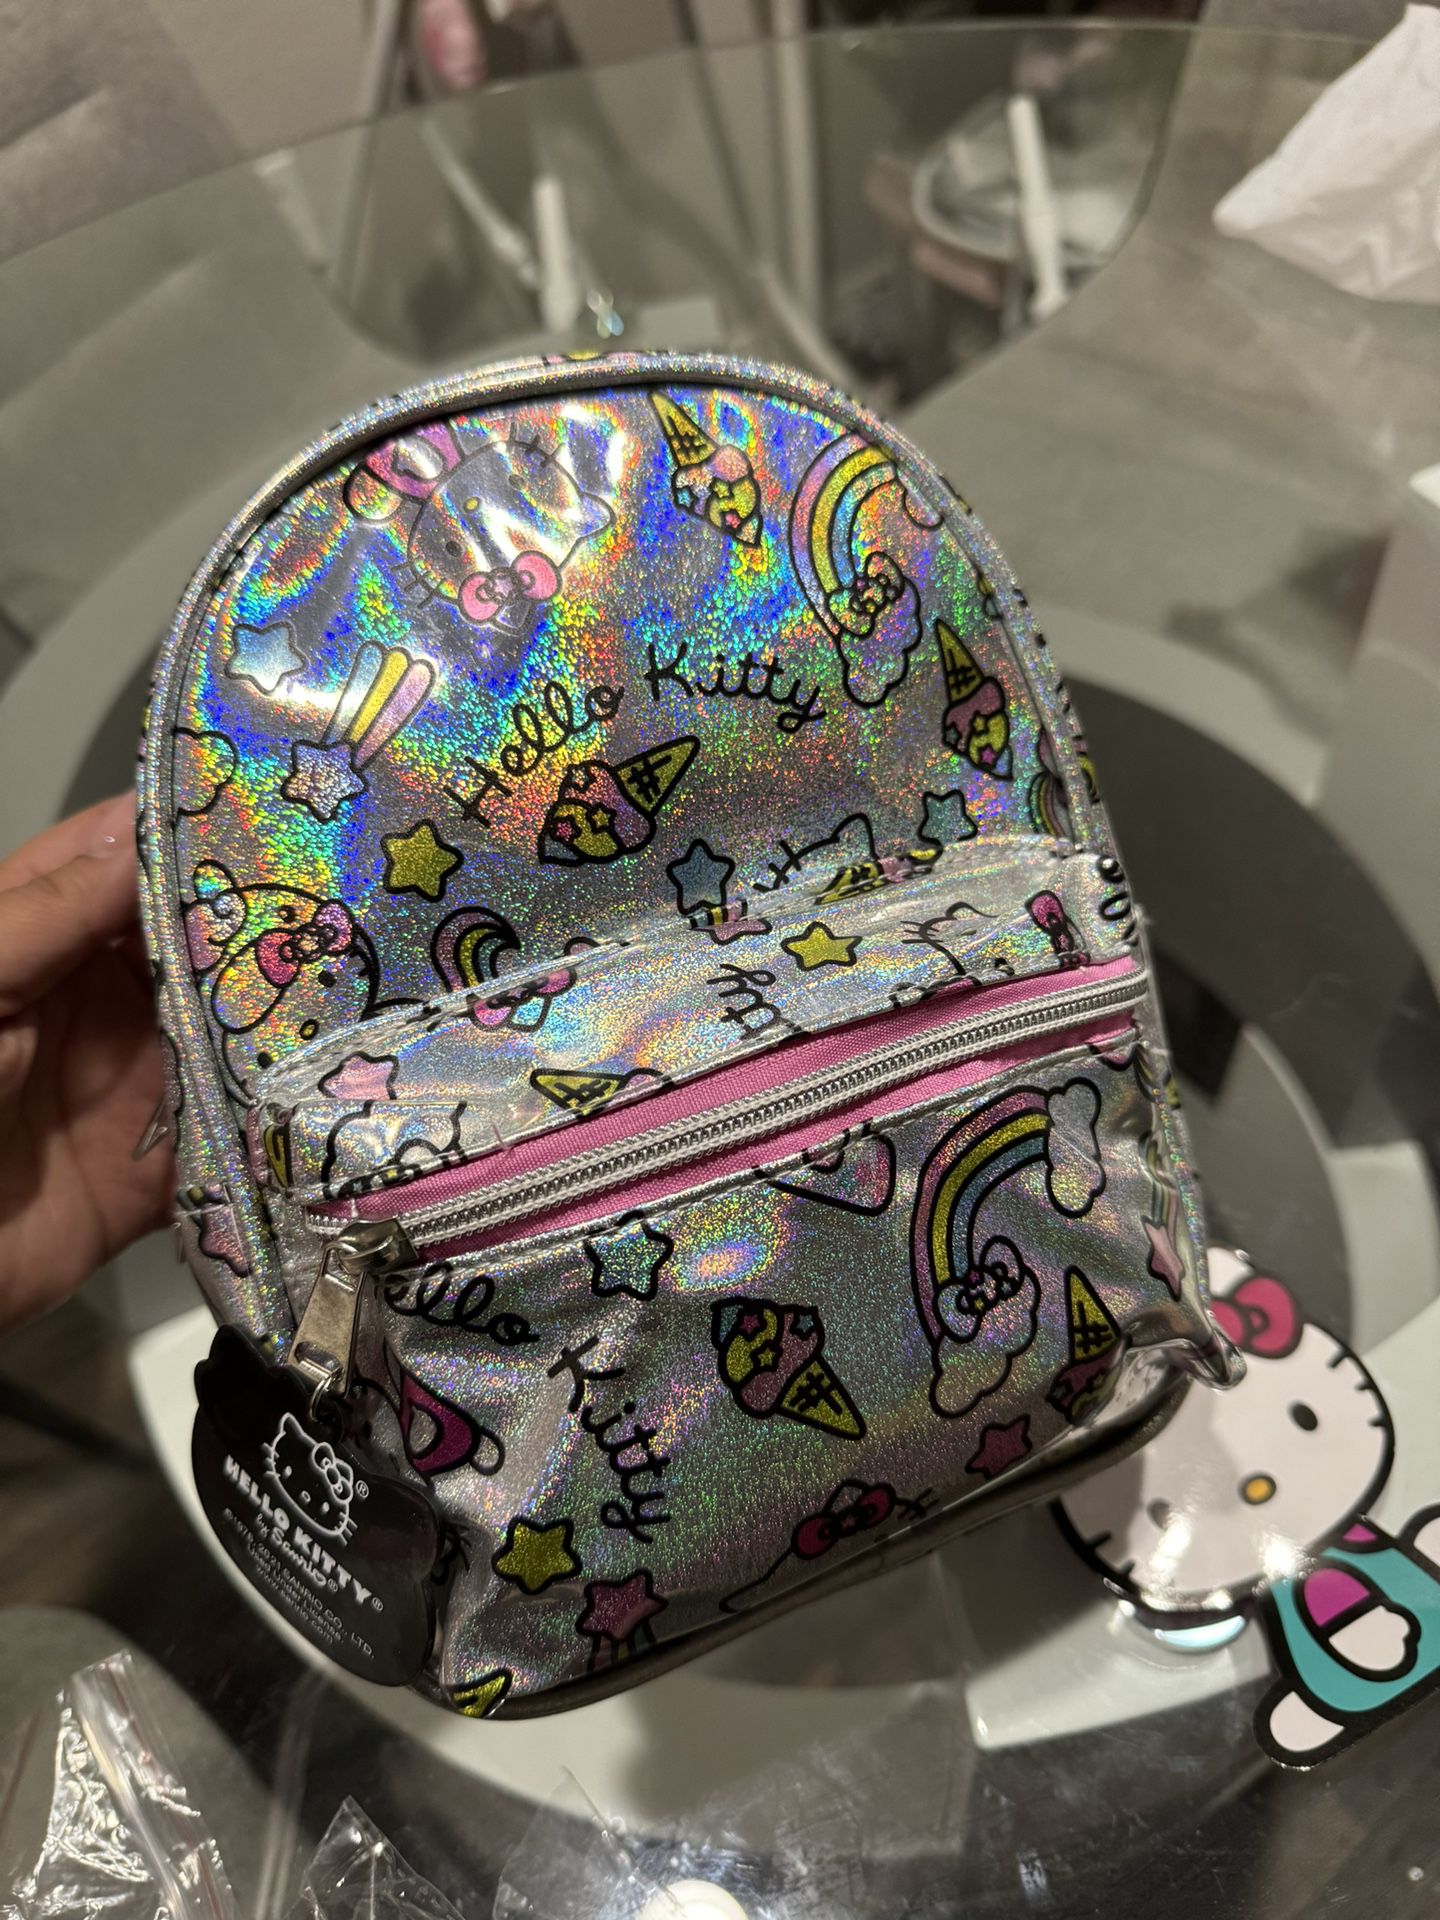 Sanrio HELLO KITTY backpack